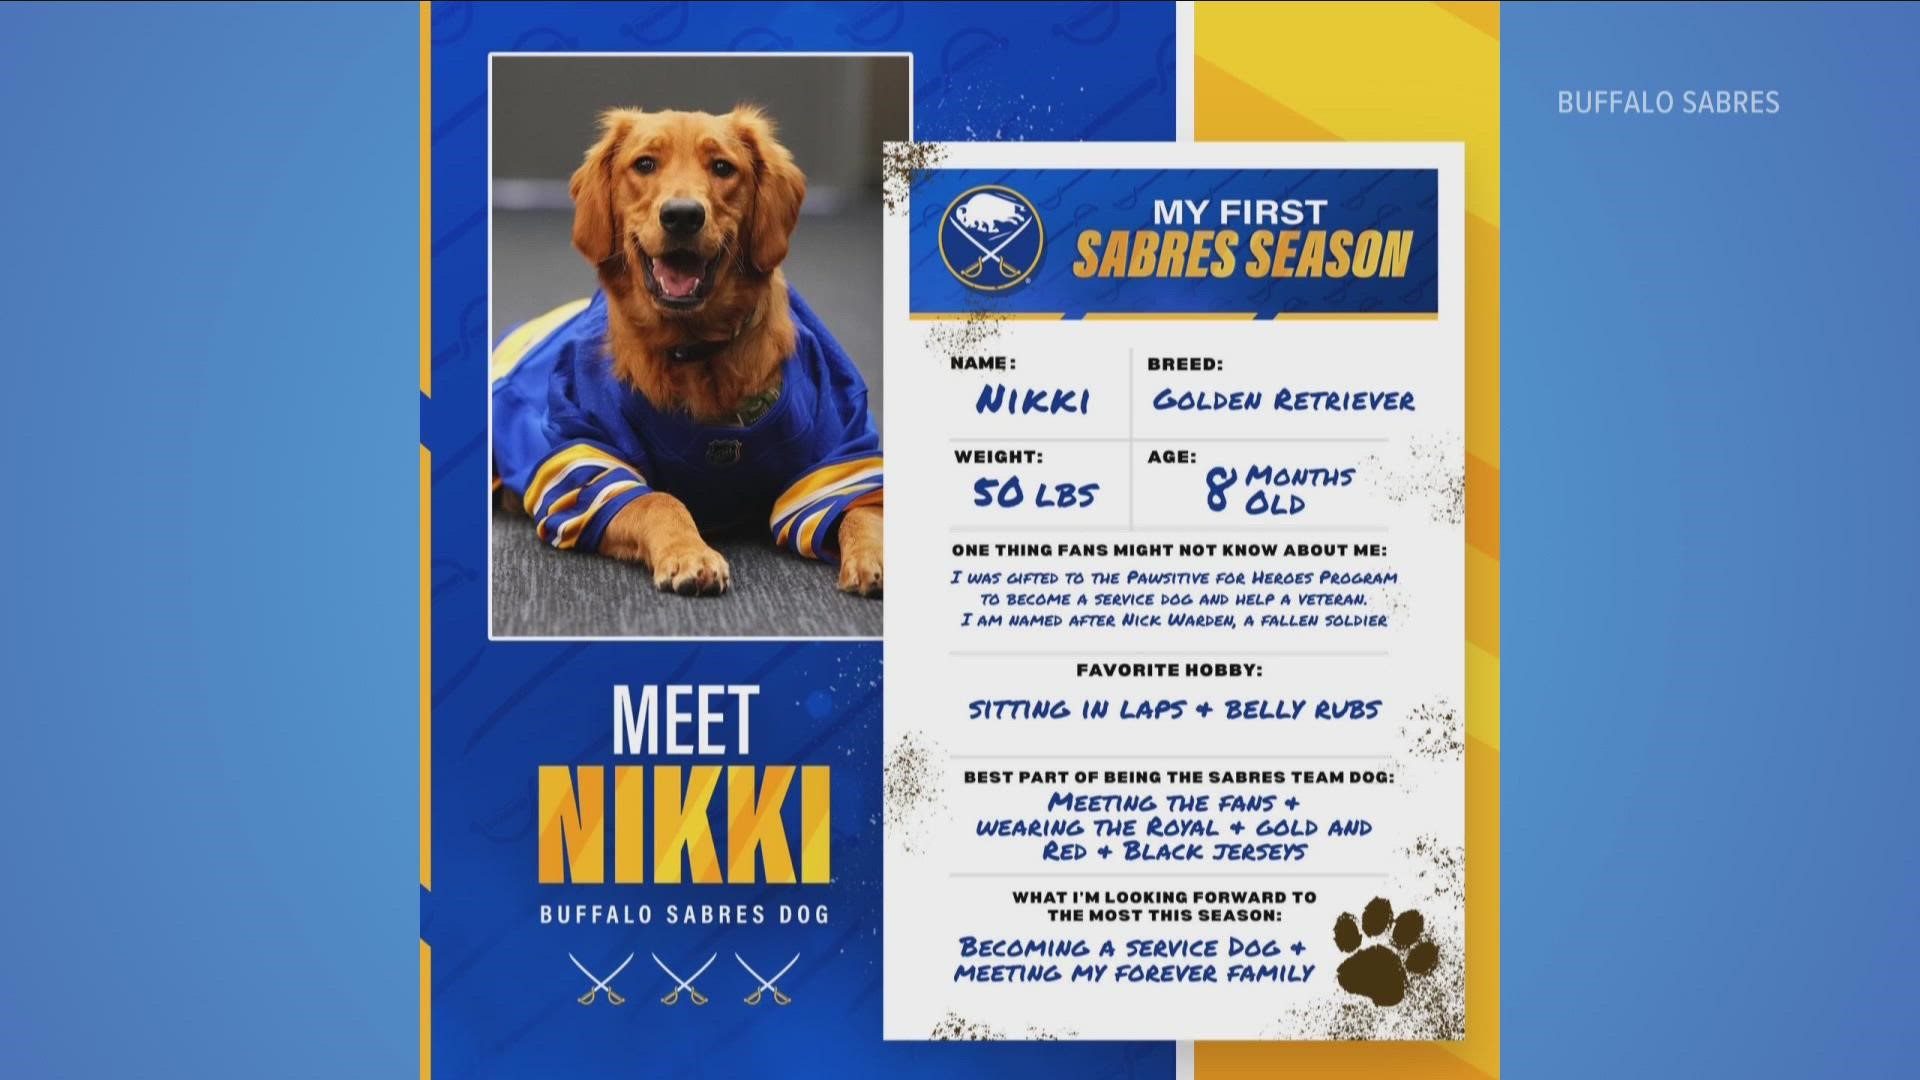 Buffalo Sabres new team pup, Nikki!